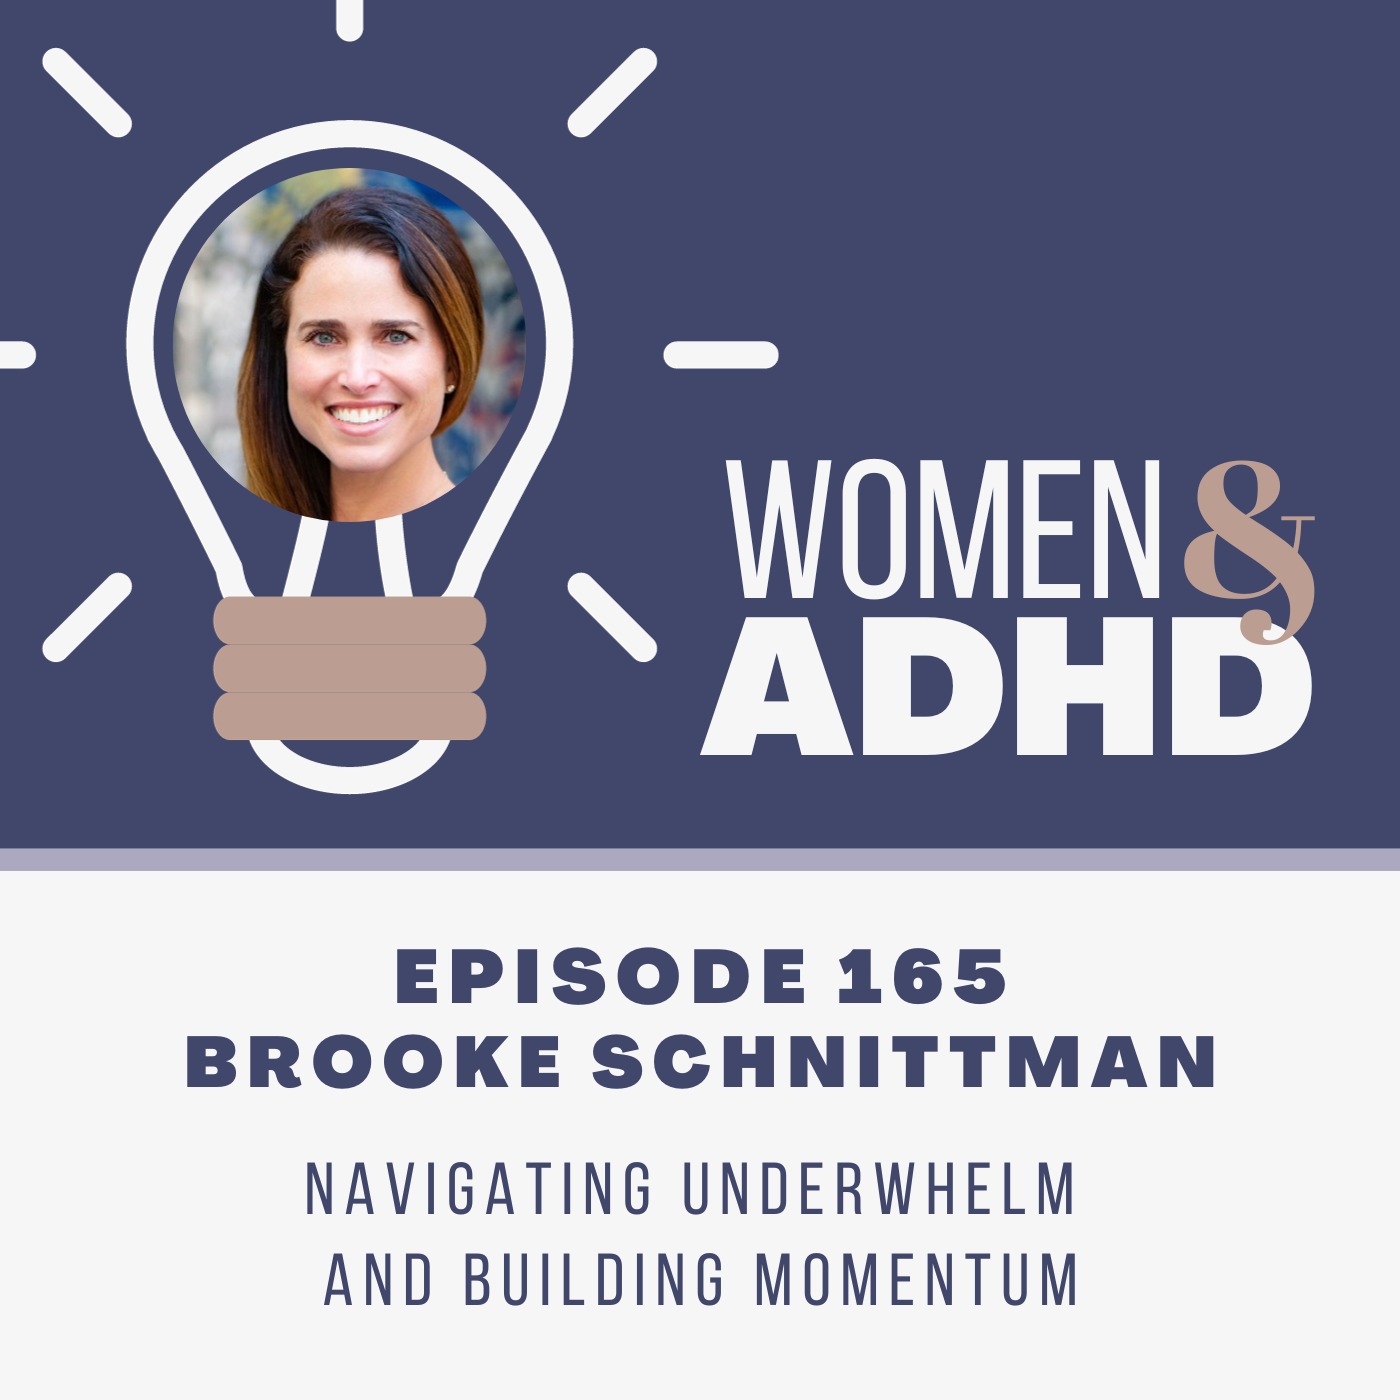 Brooke Schnittman: Navigating underwhelm and building momentum